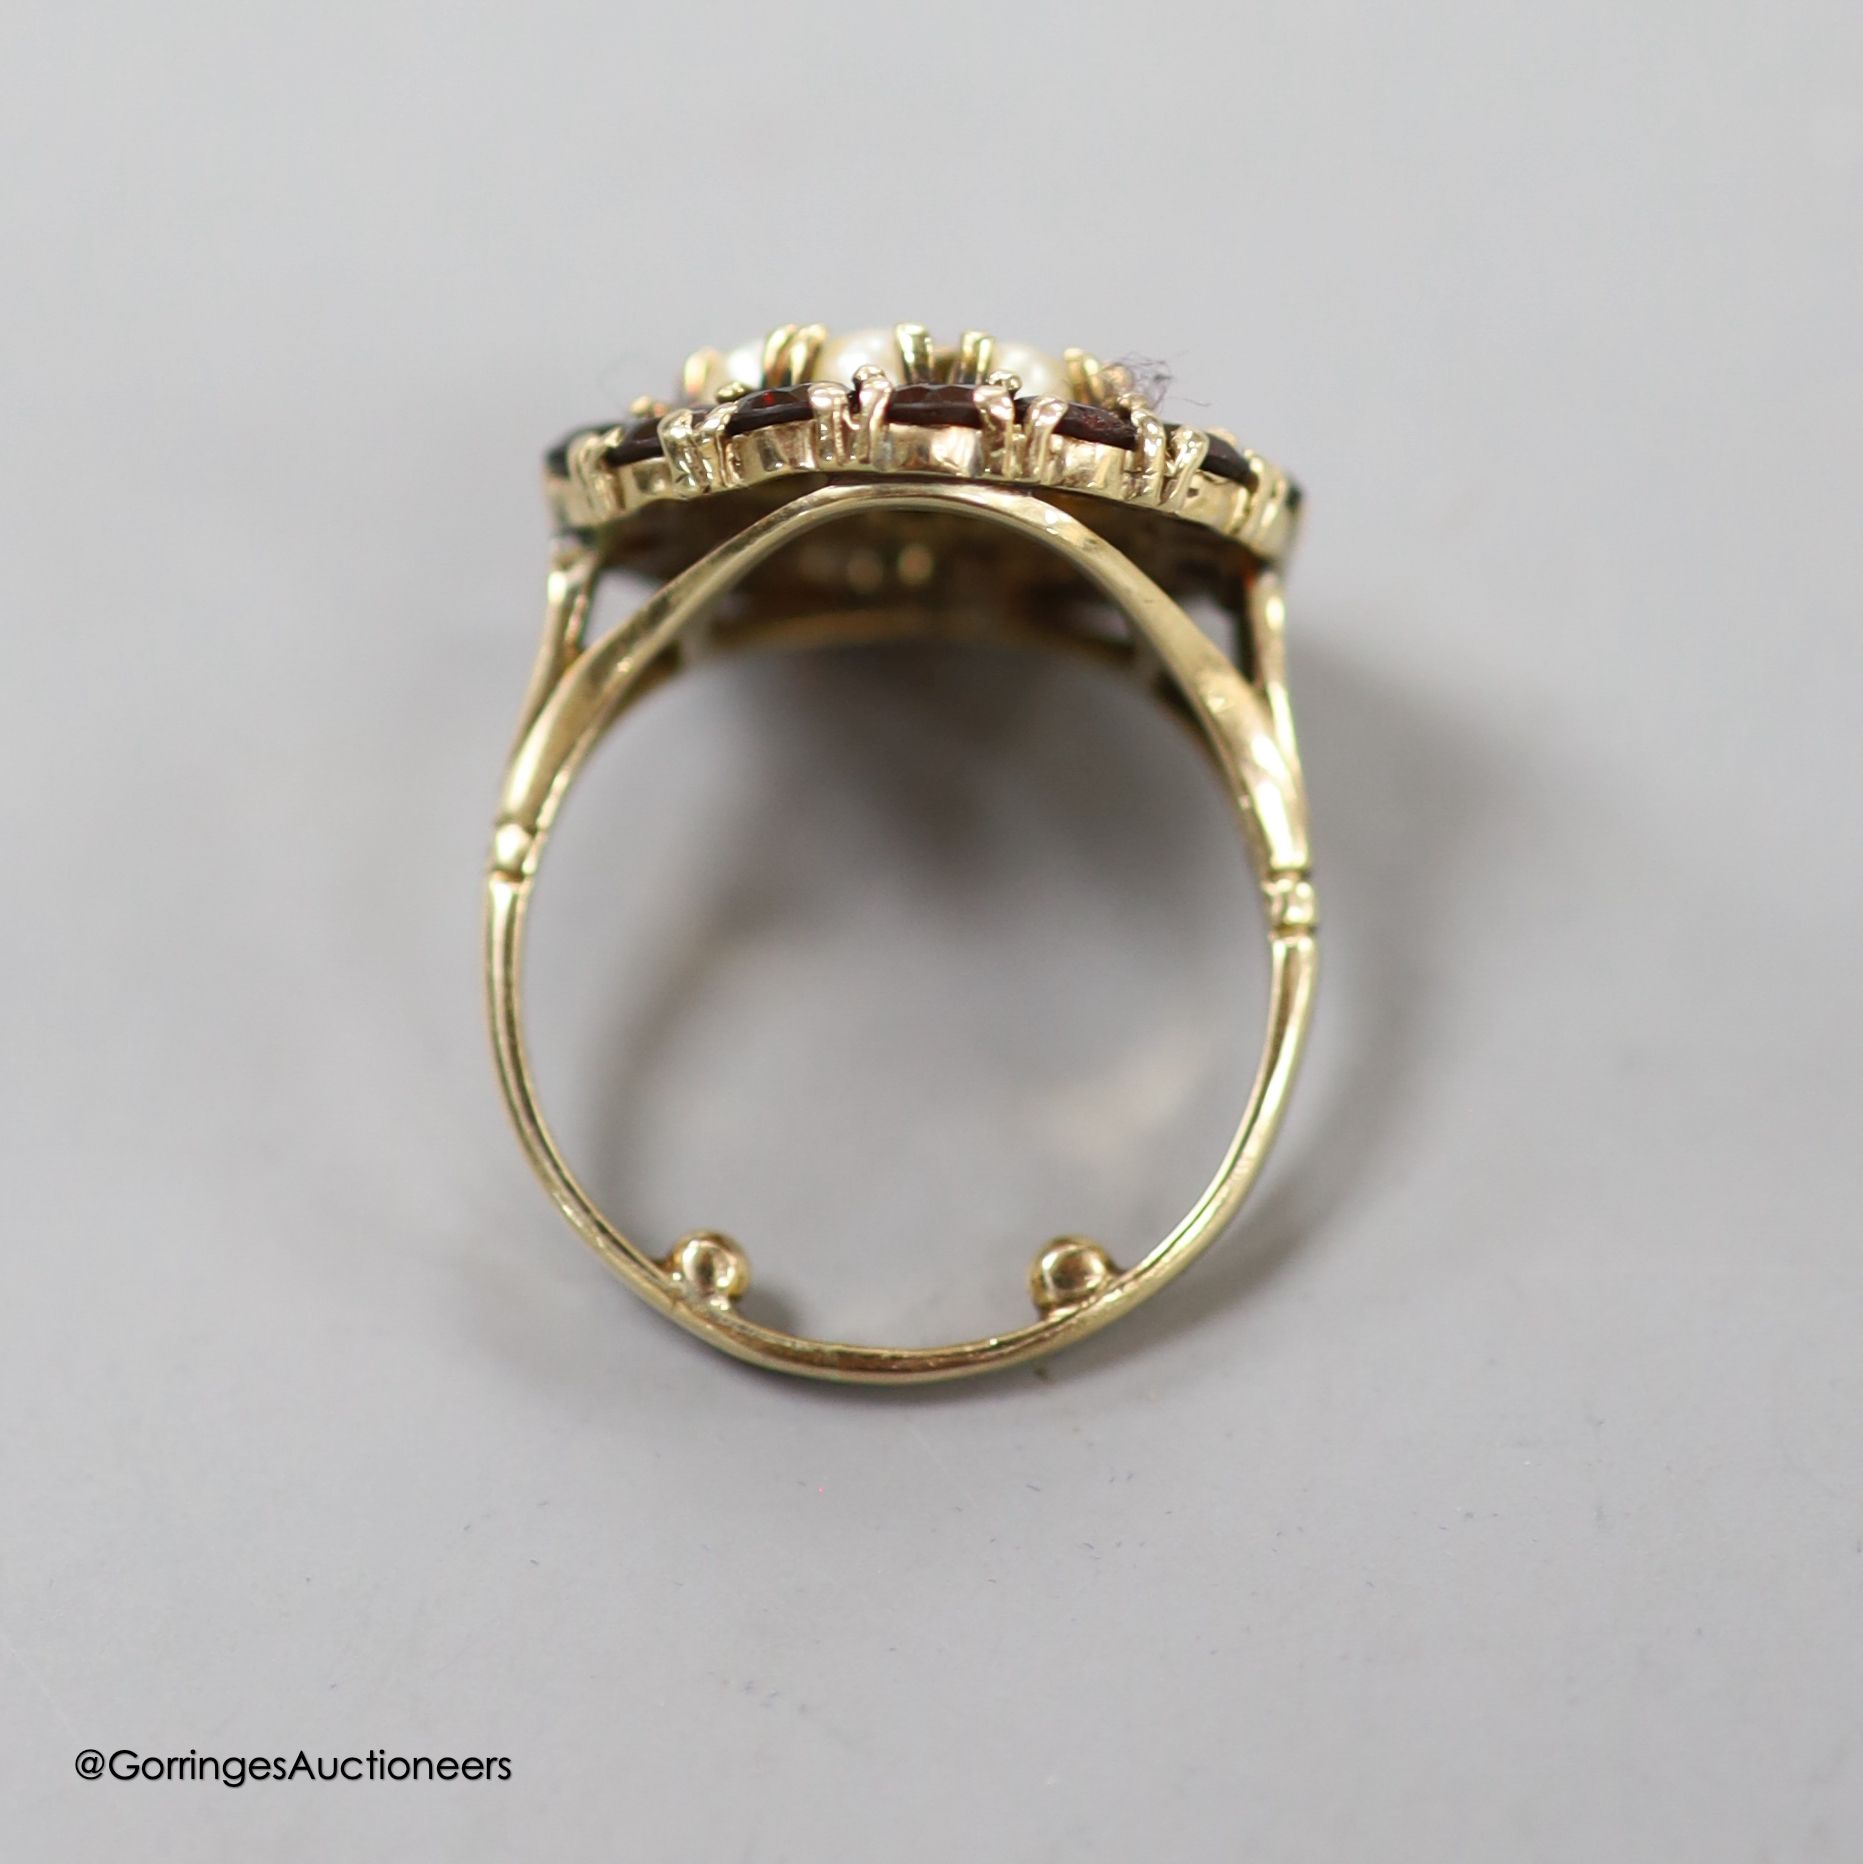 A modern 9ct gold, garnet and split pearl set circular cluster ring, size M, 5 grams.